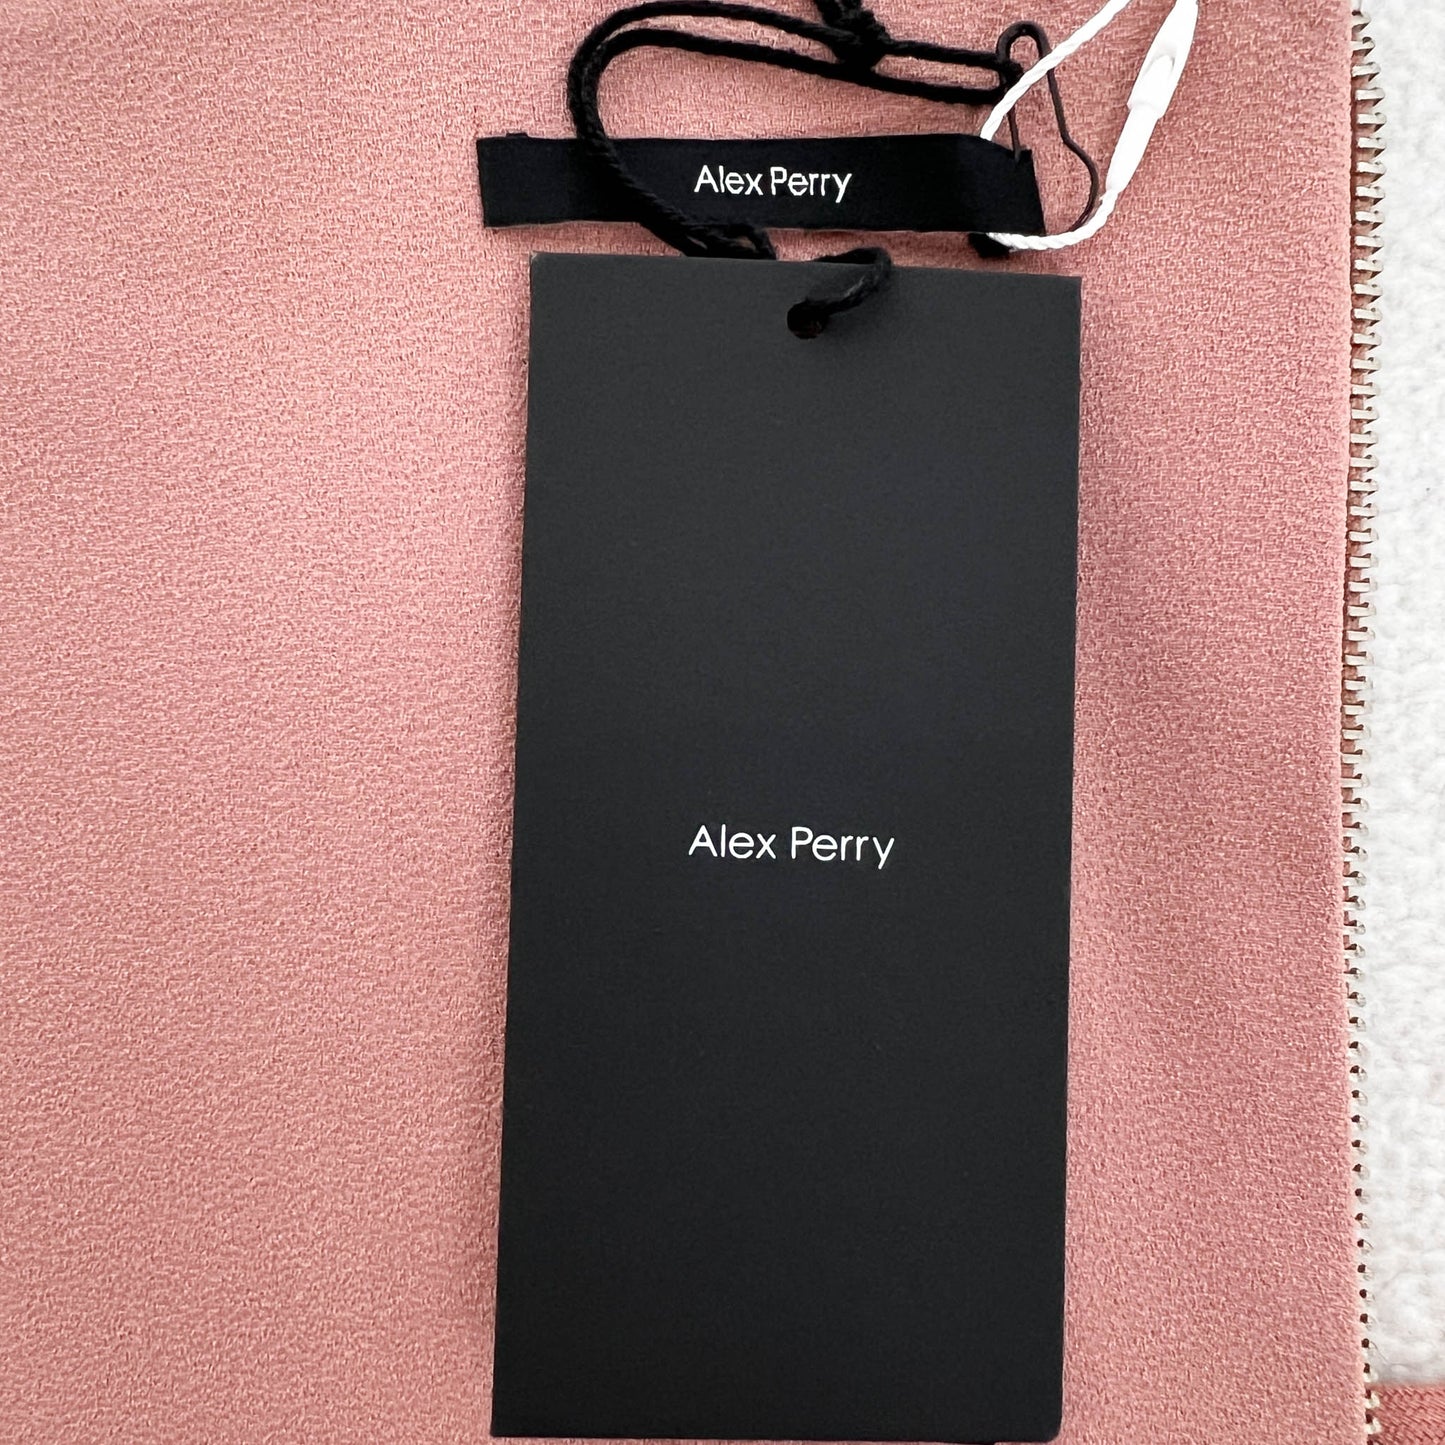 Alex Perry Miran Light Pink Stretch Crepe Eyelet Corset Dress 10